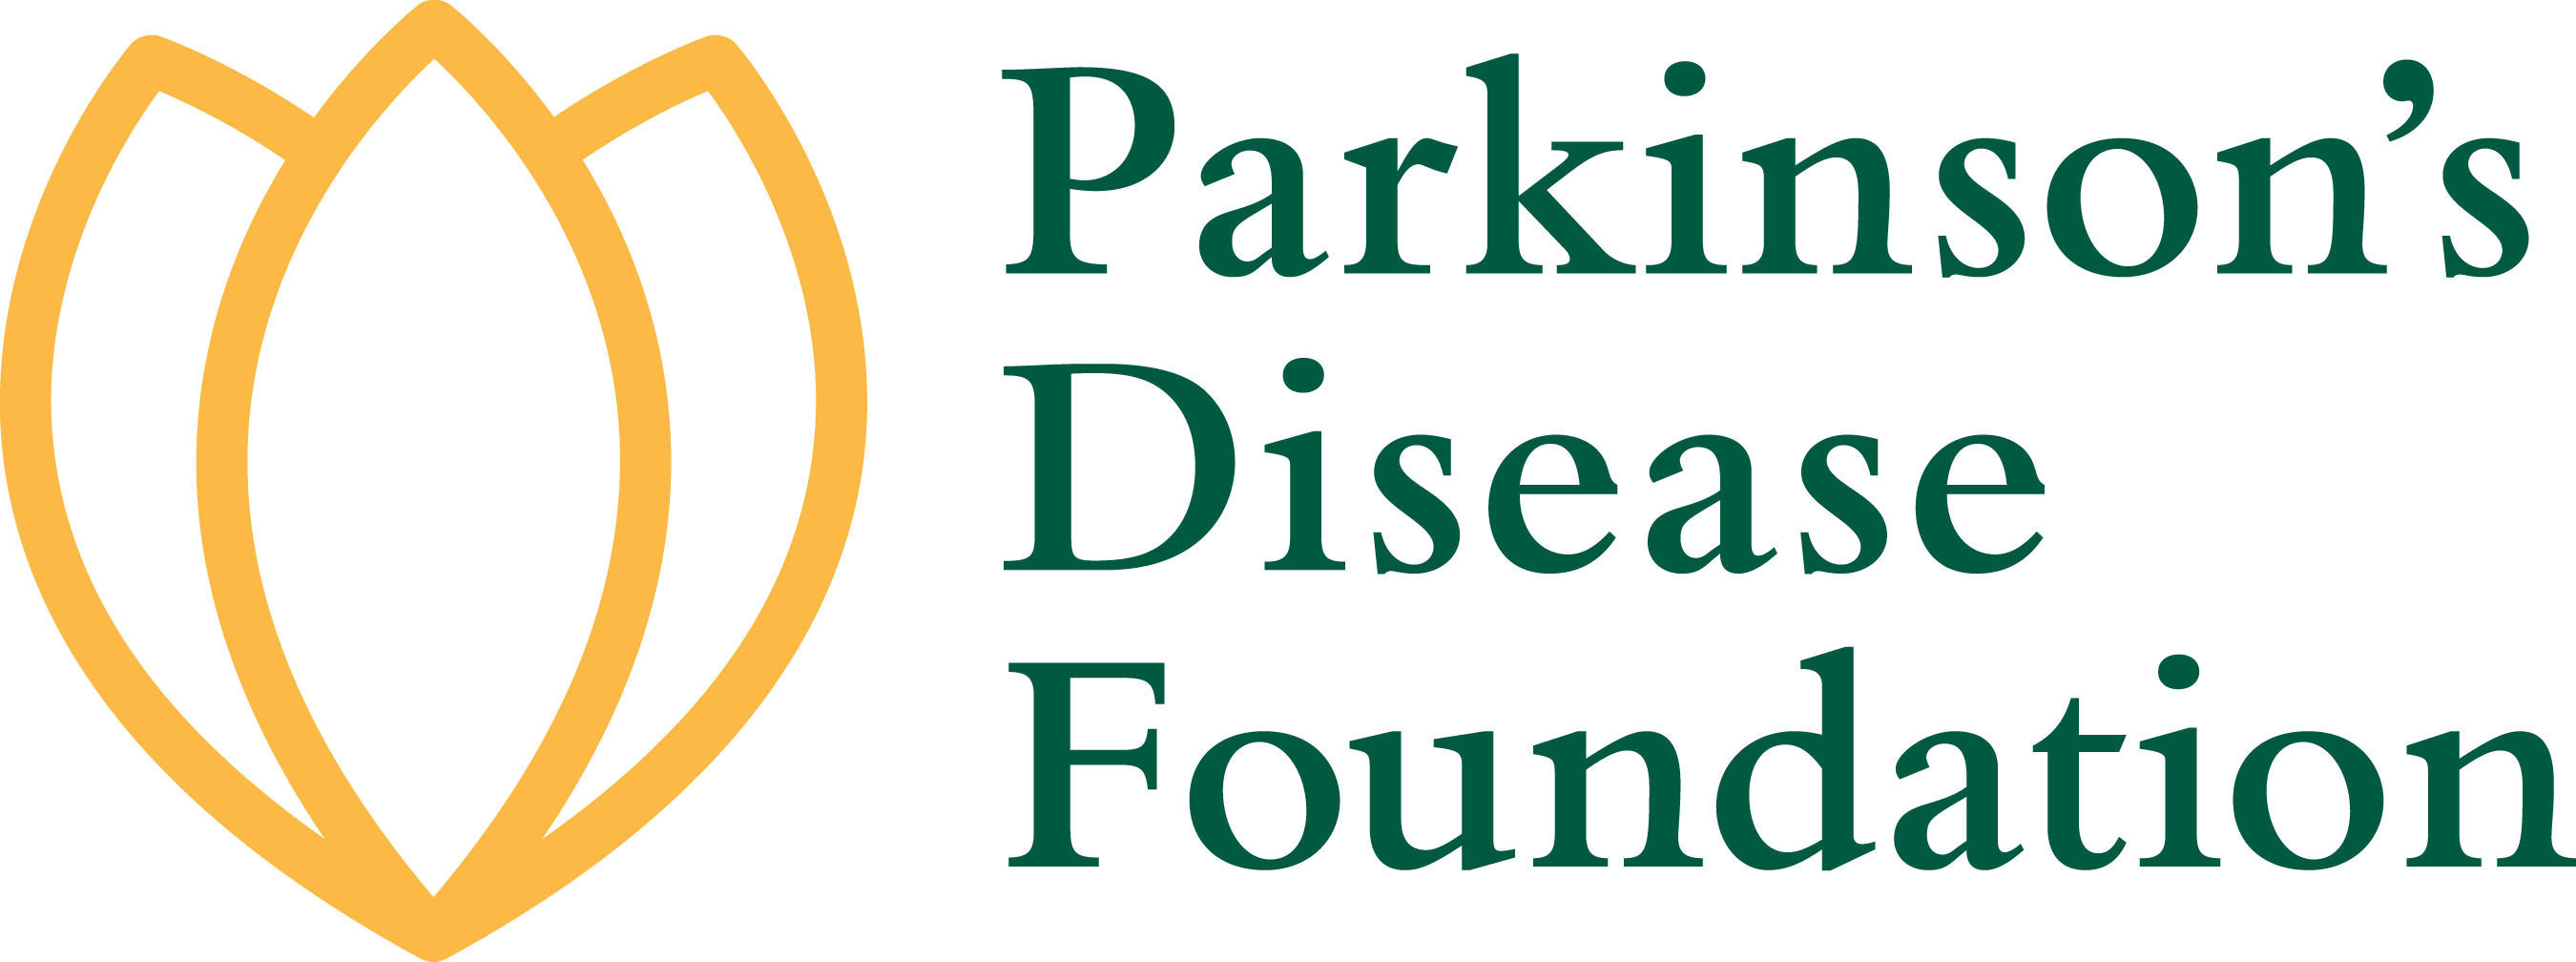 Parkinson's Disease Foundation logo. (PRNewsFoto/Parkinson's Disease Foundation) (PRNewsFoto/)